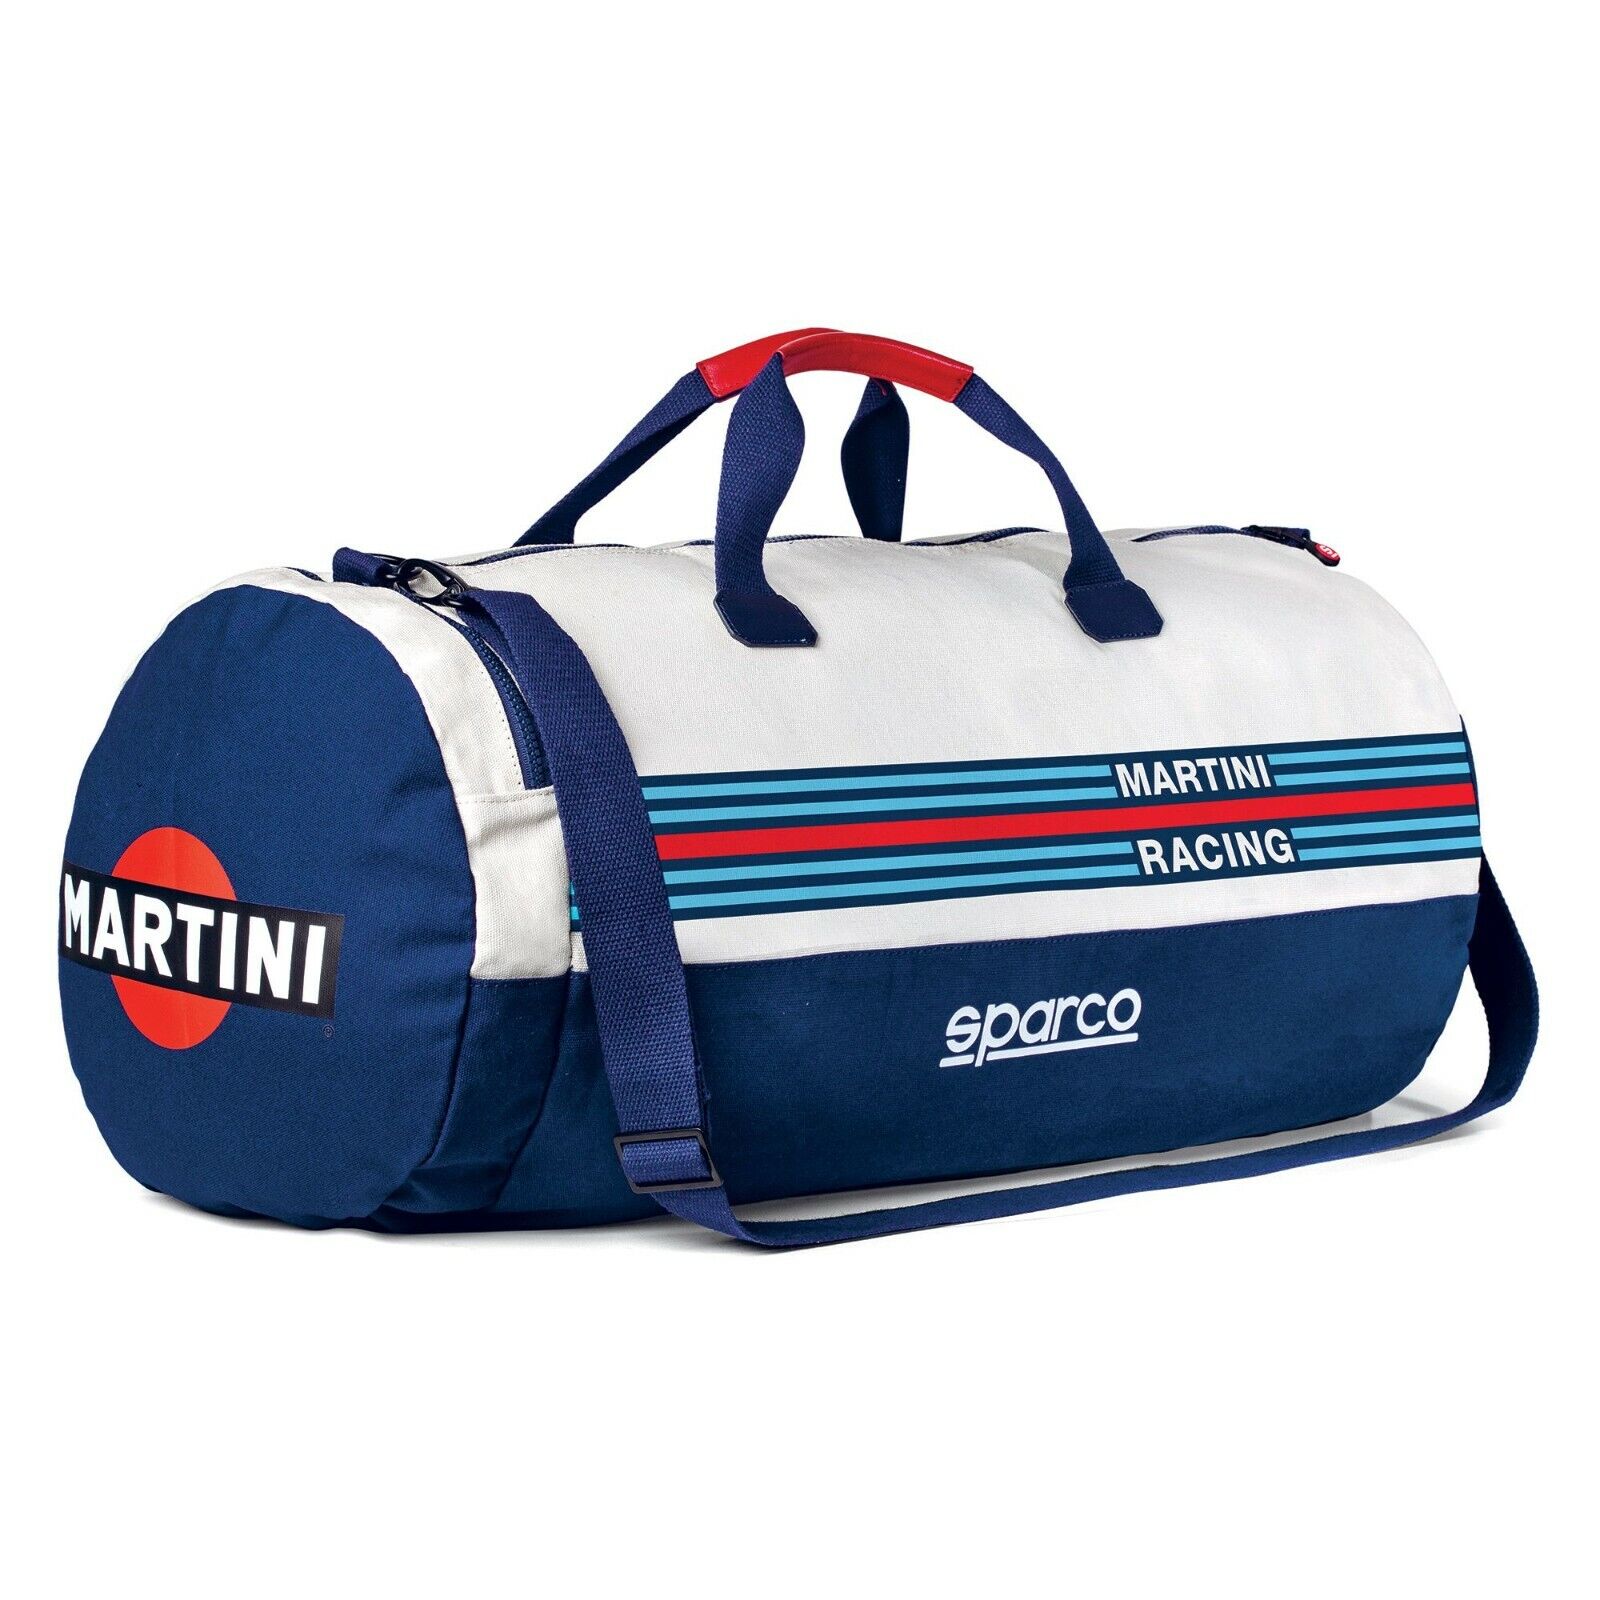 Sparco Martini Racing Sport Bag Blue/White Detachable Shoulder Strap Waterproof 